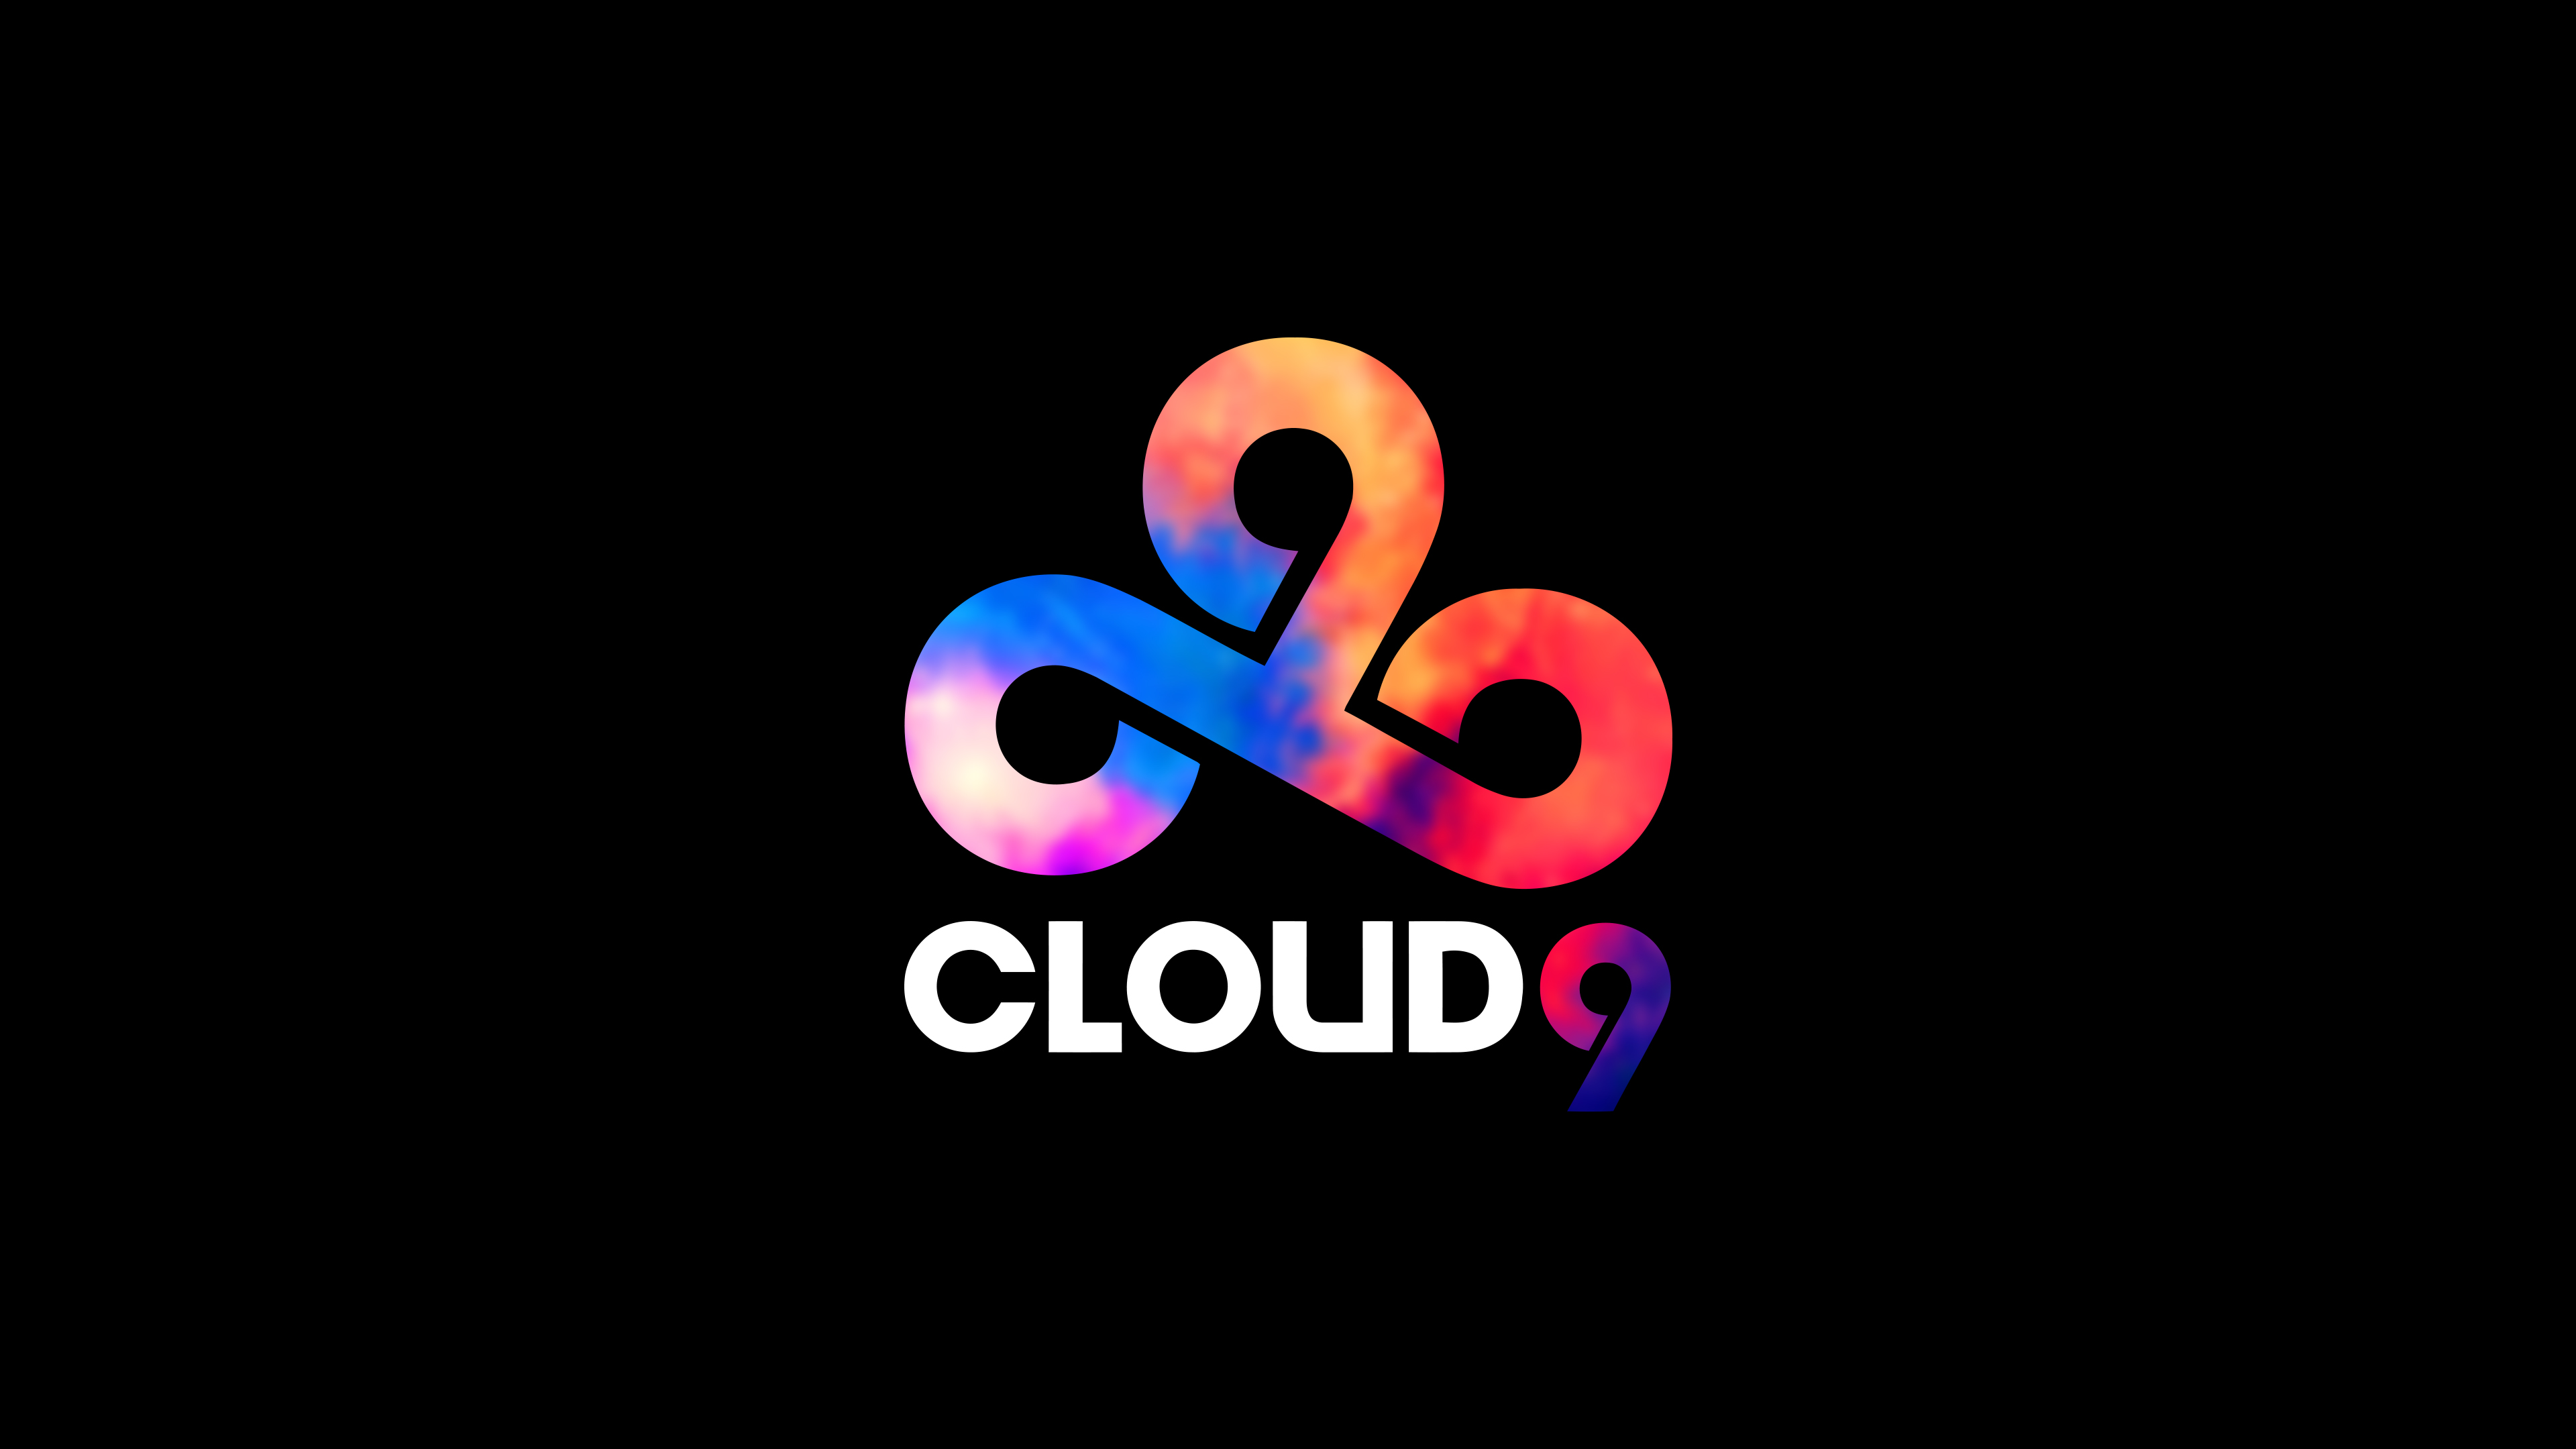 Cloud 9 | LoLWallpapers
